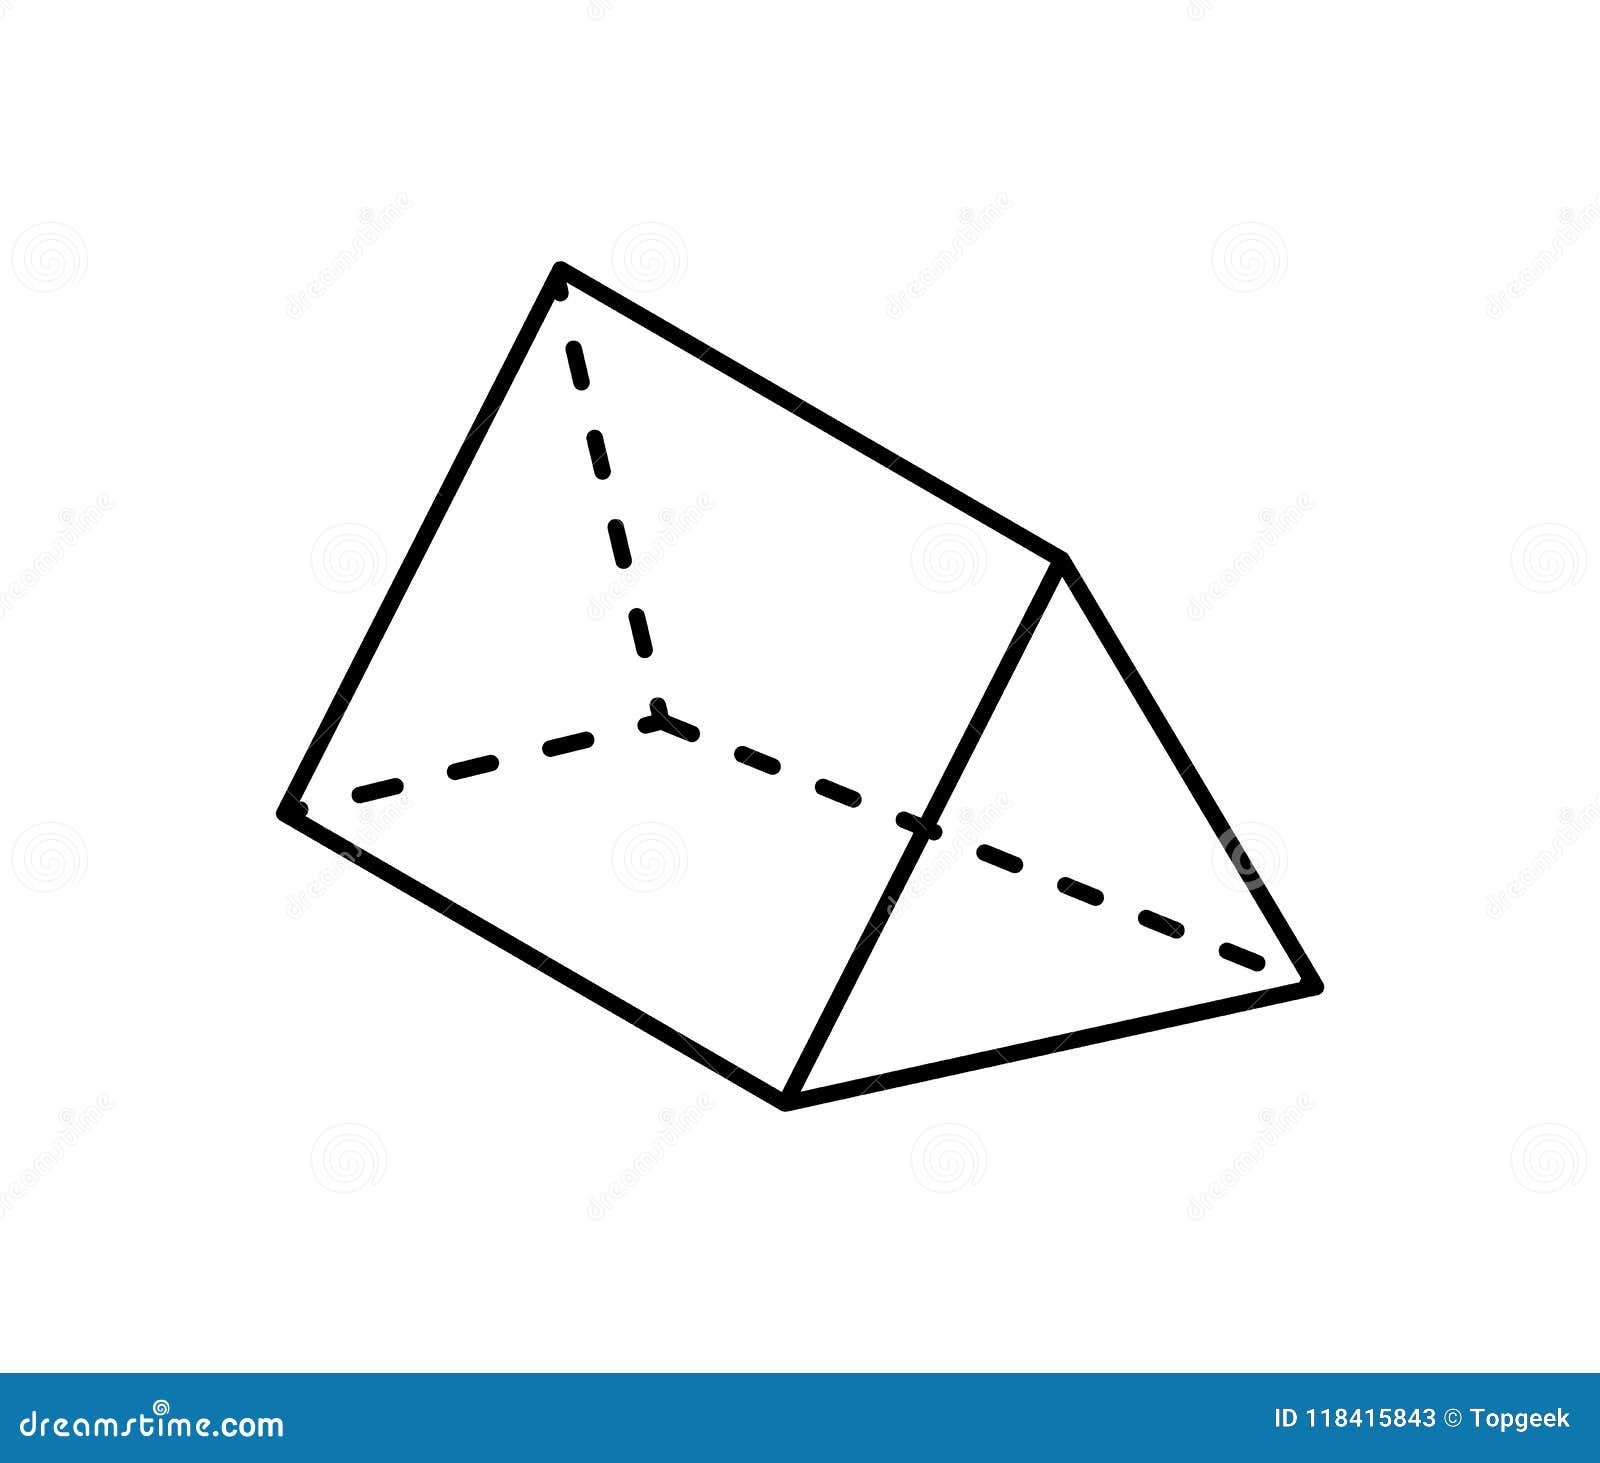 triangular prism geometric figure in black color